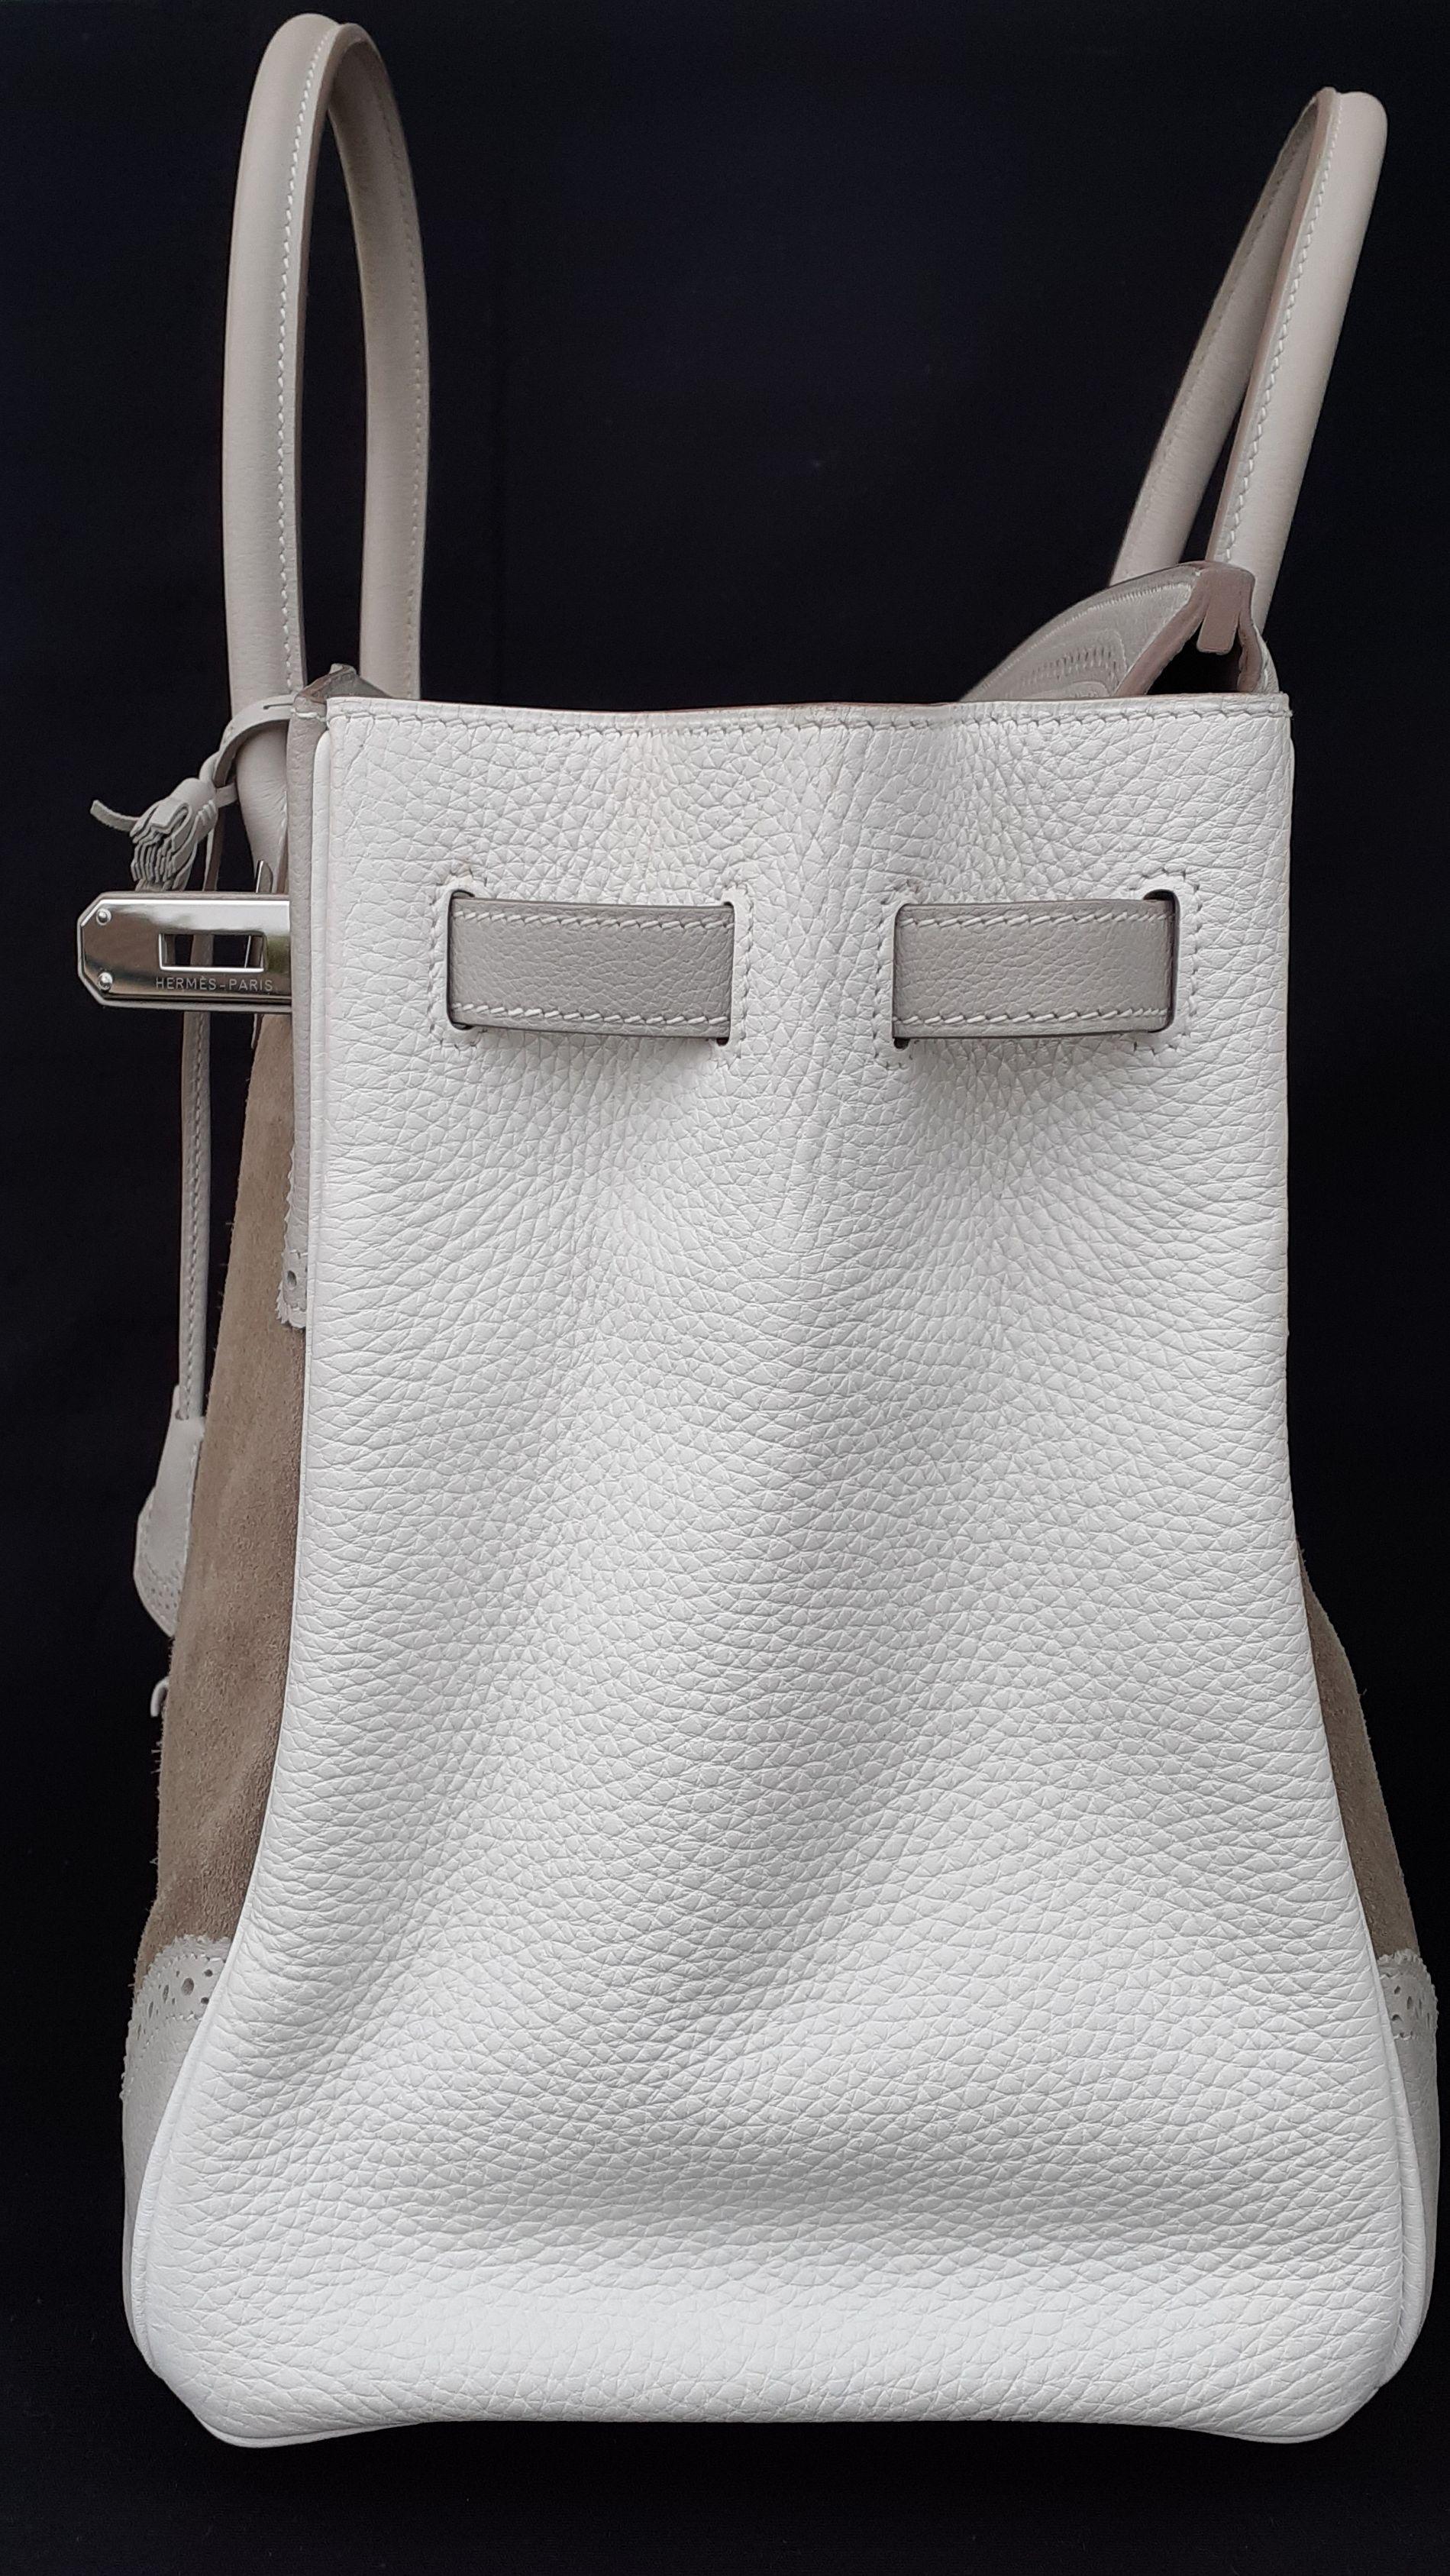 Hermès Birkin 35 Tasche Limited Edition Ghillies Grizzly Doblis Grau Weiß Caillou im Angebot 13